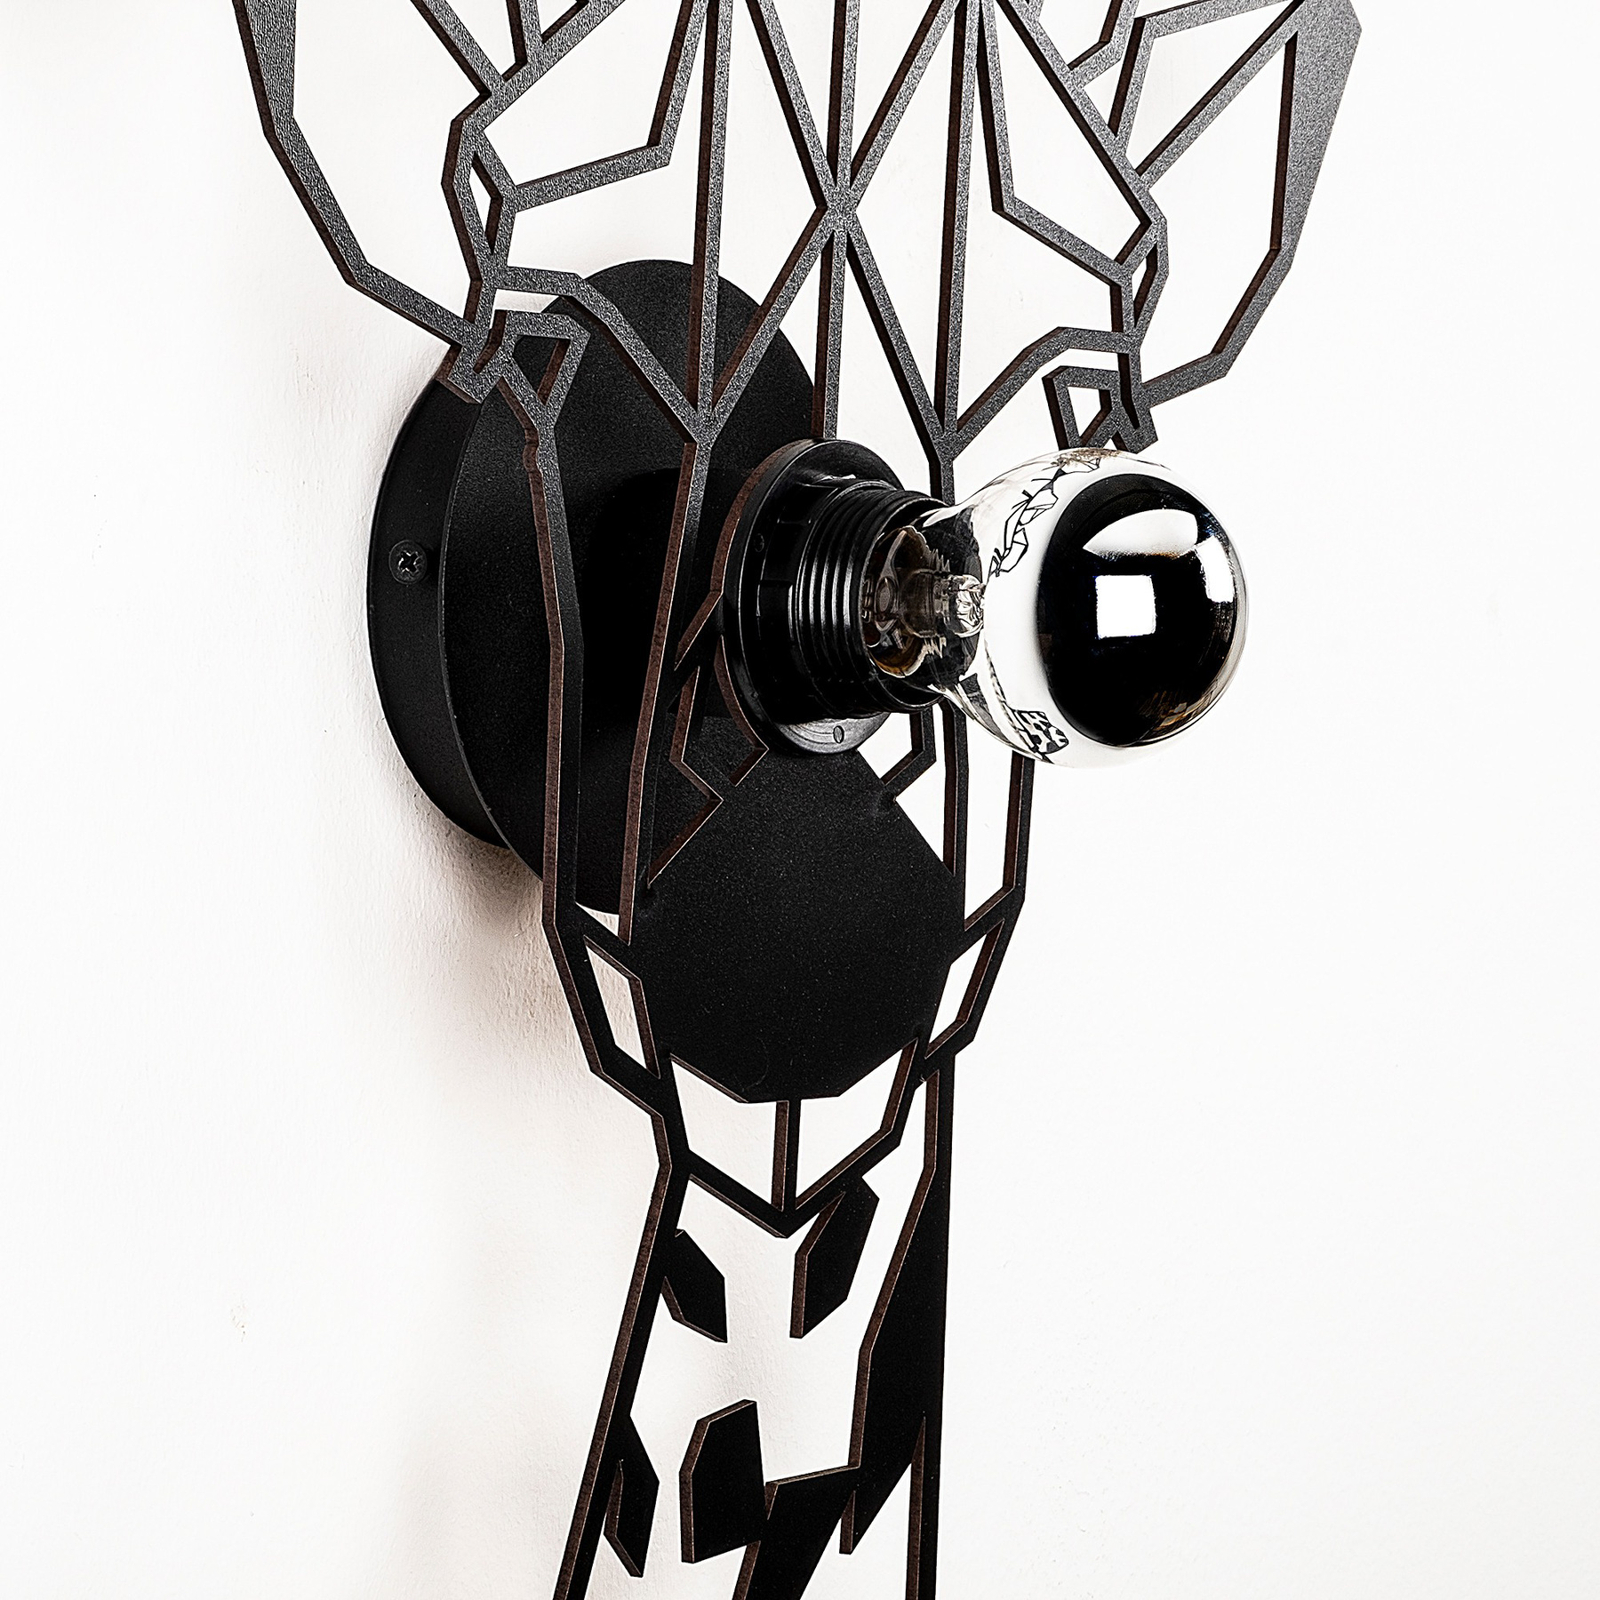 Vägglampa W-029, lasercut, giraffer design, svart